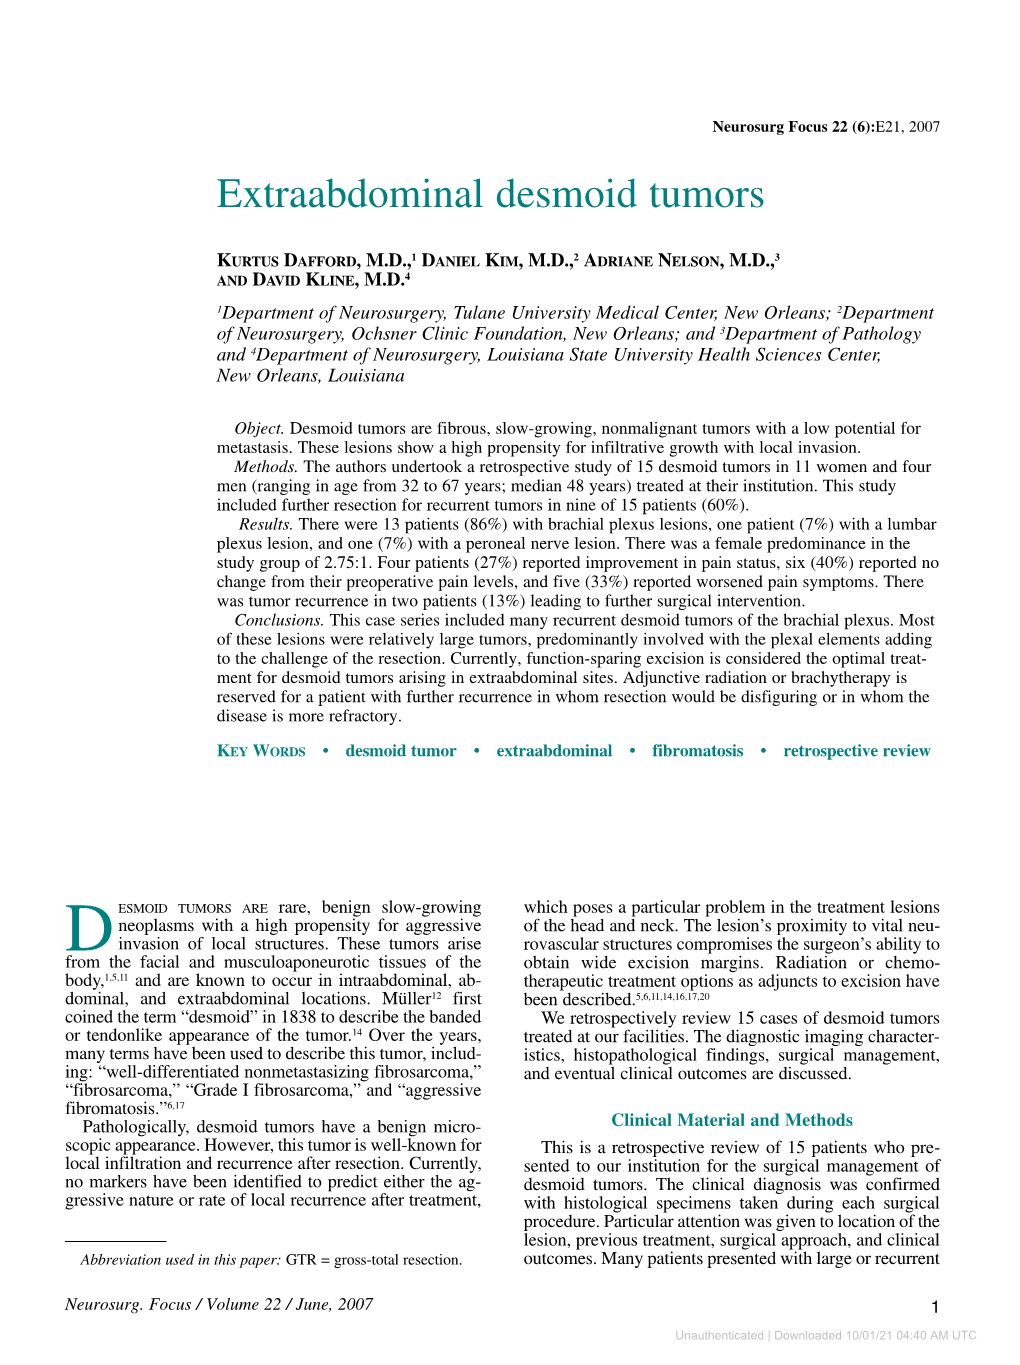 Extraabdominal Desmoid Tumors